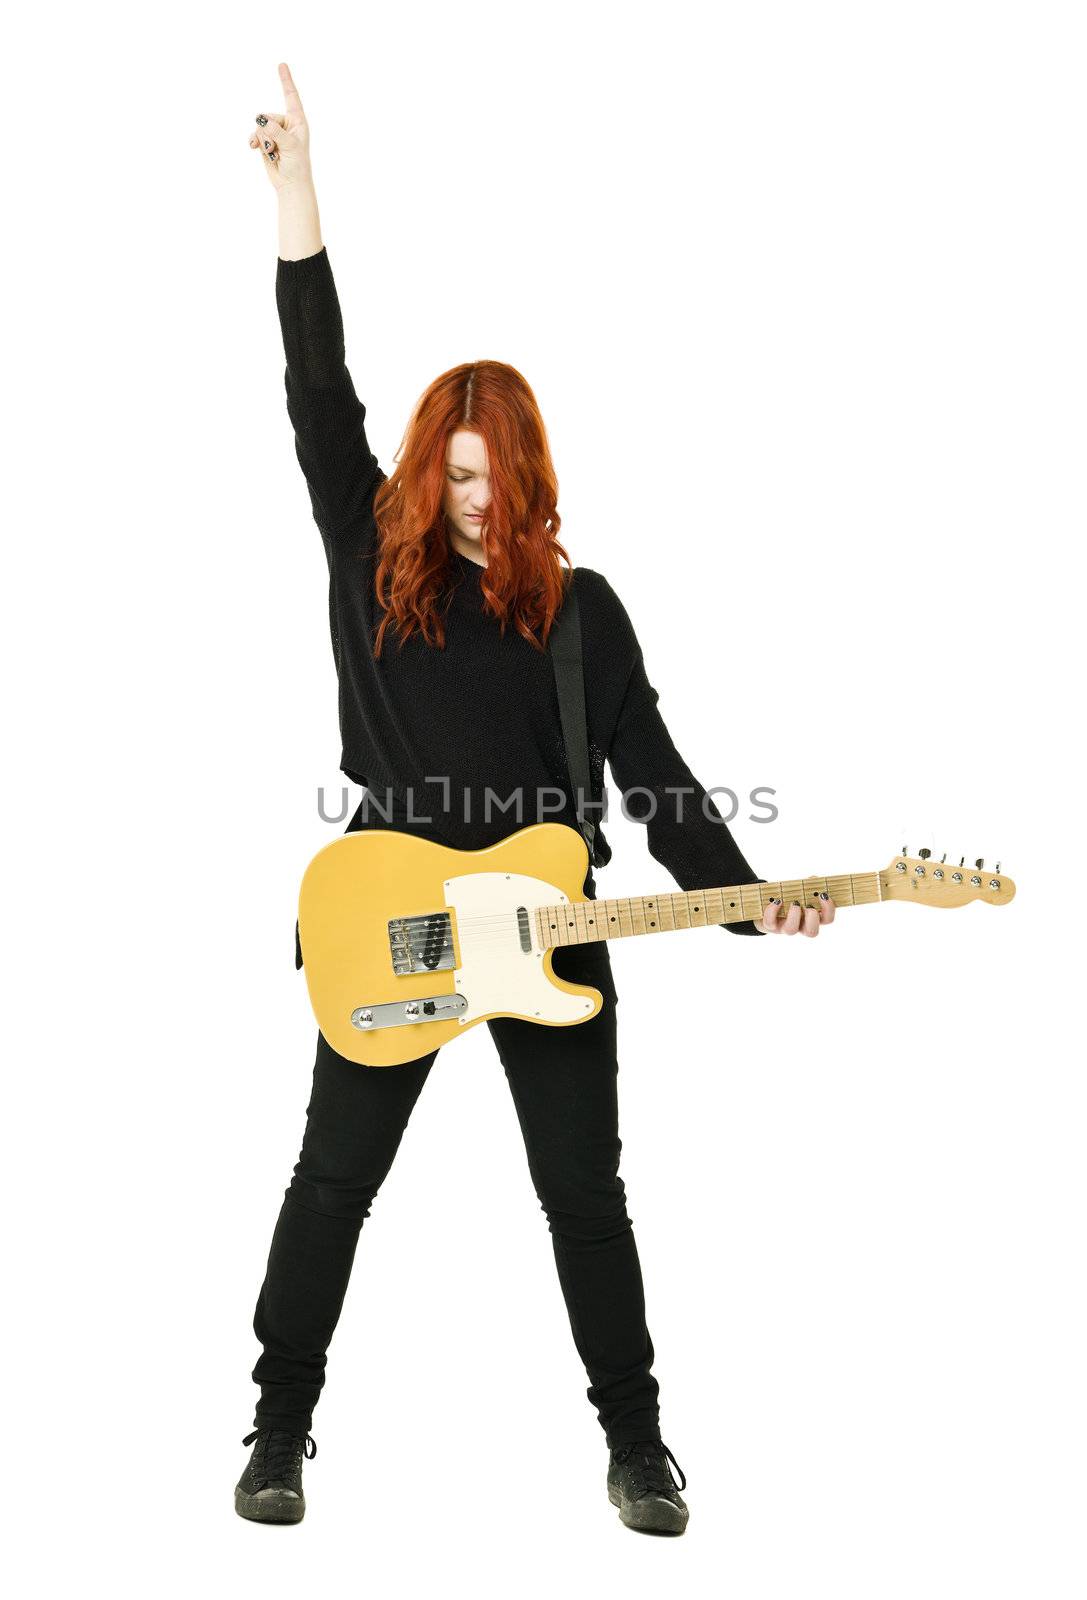 Female Guitar player by gemenacom